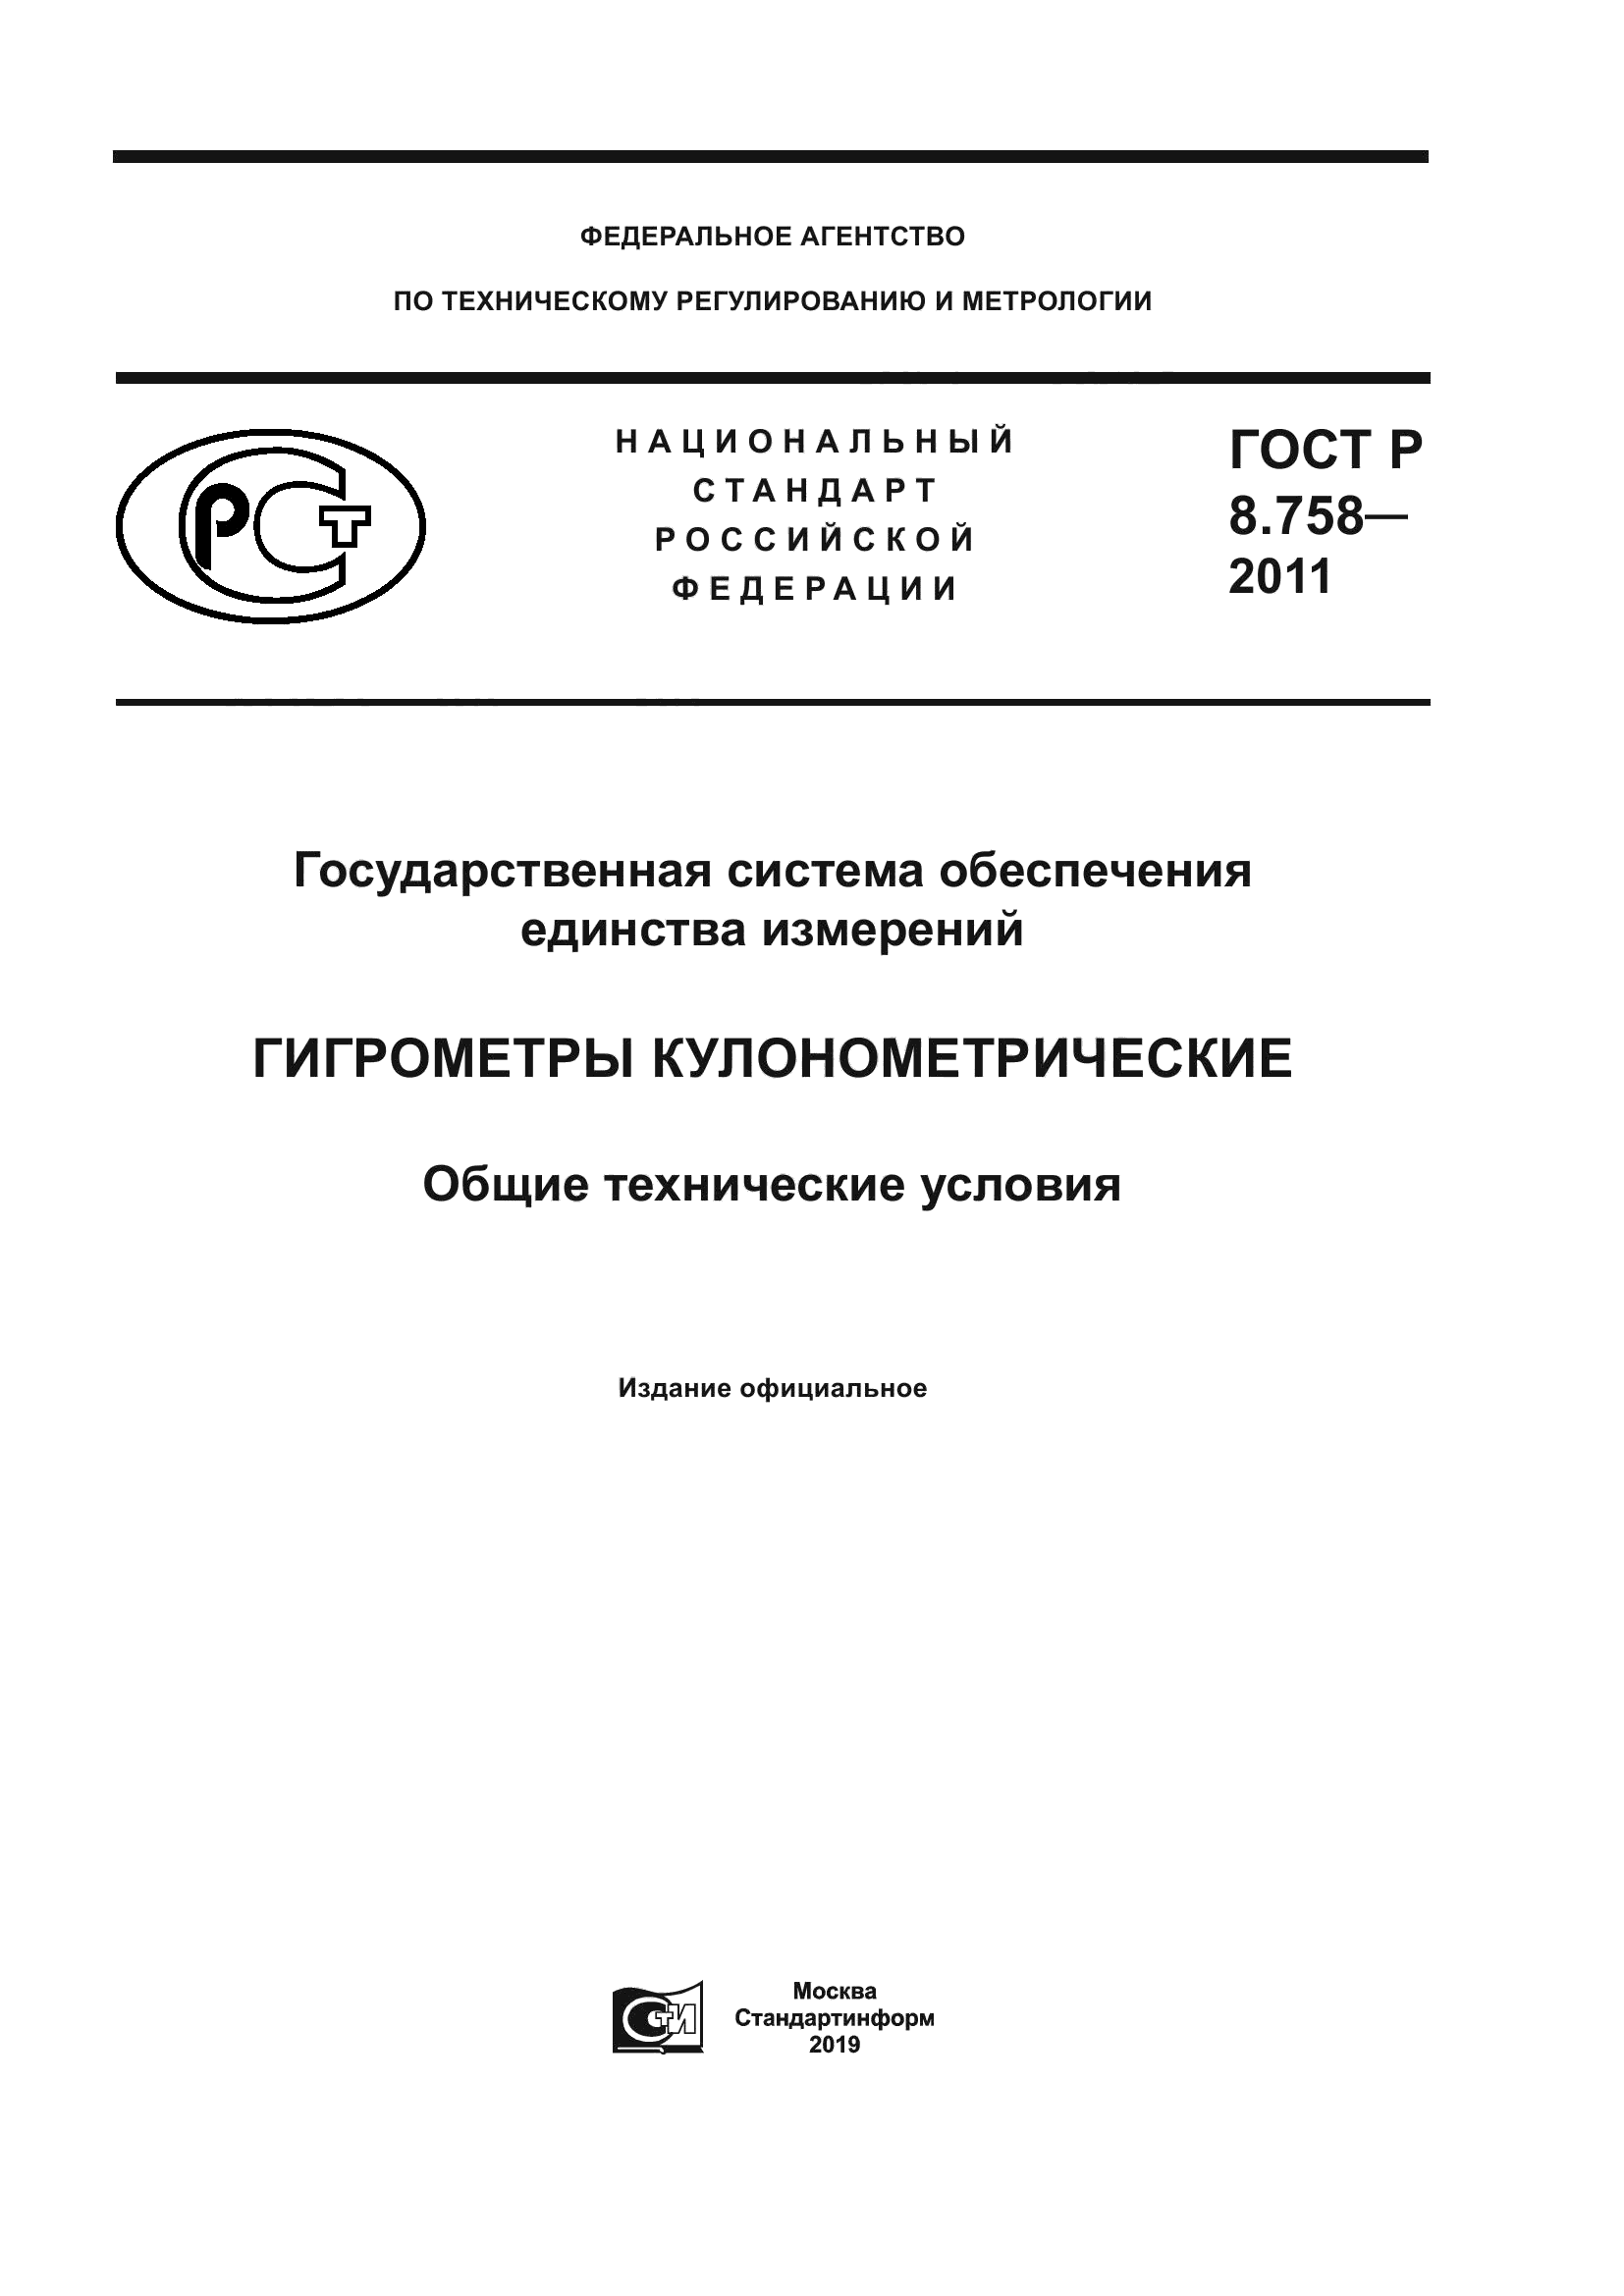 ГОСТ Р 8.758-2011